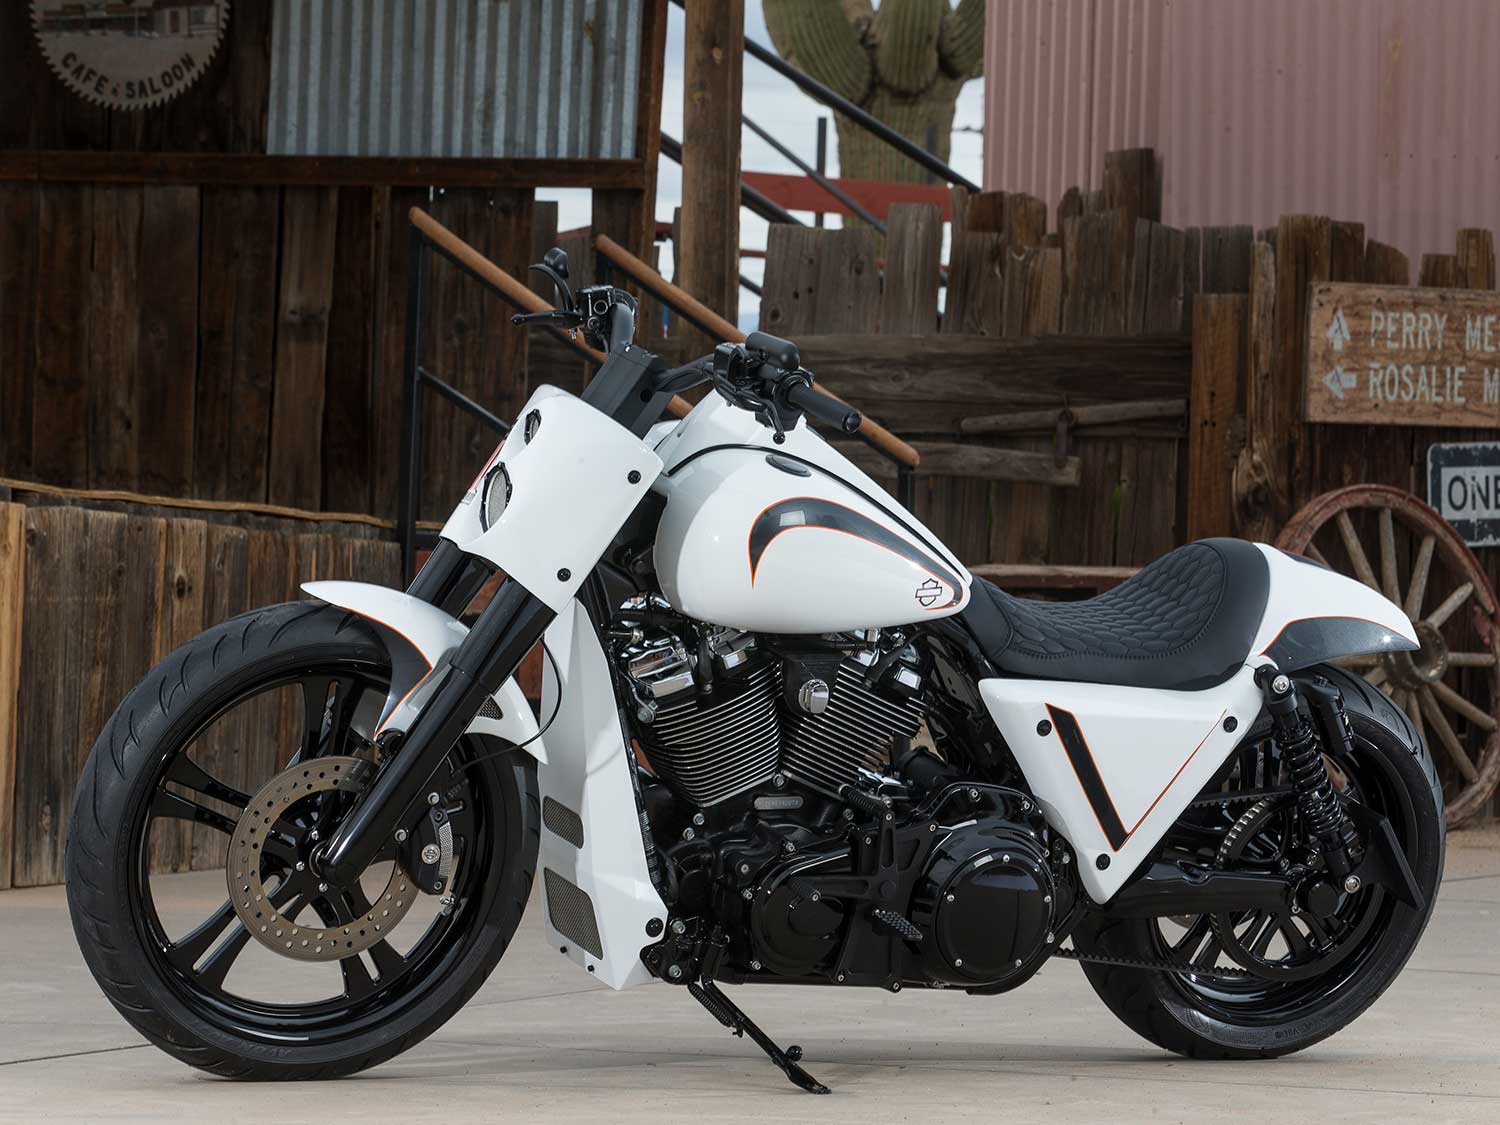 Matt Frick’s custom built Harley-Davidson Tour bike.